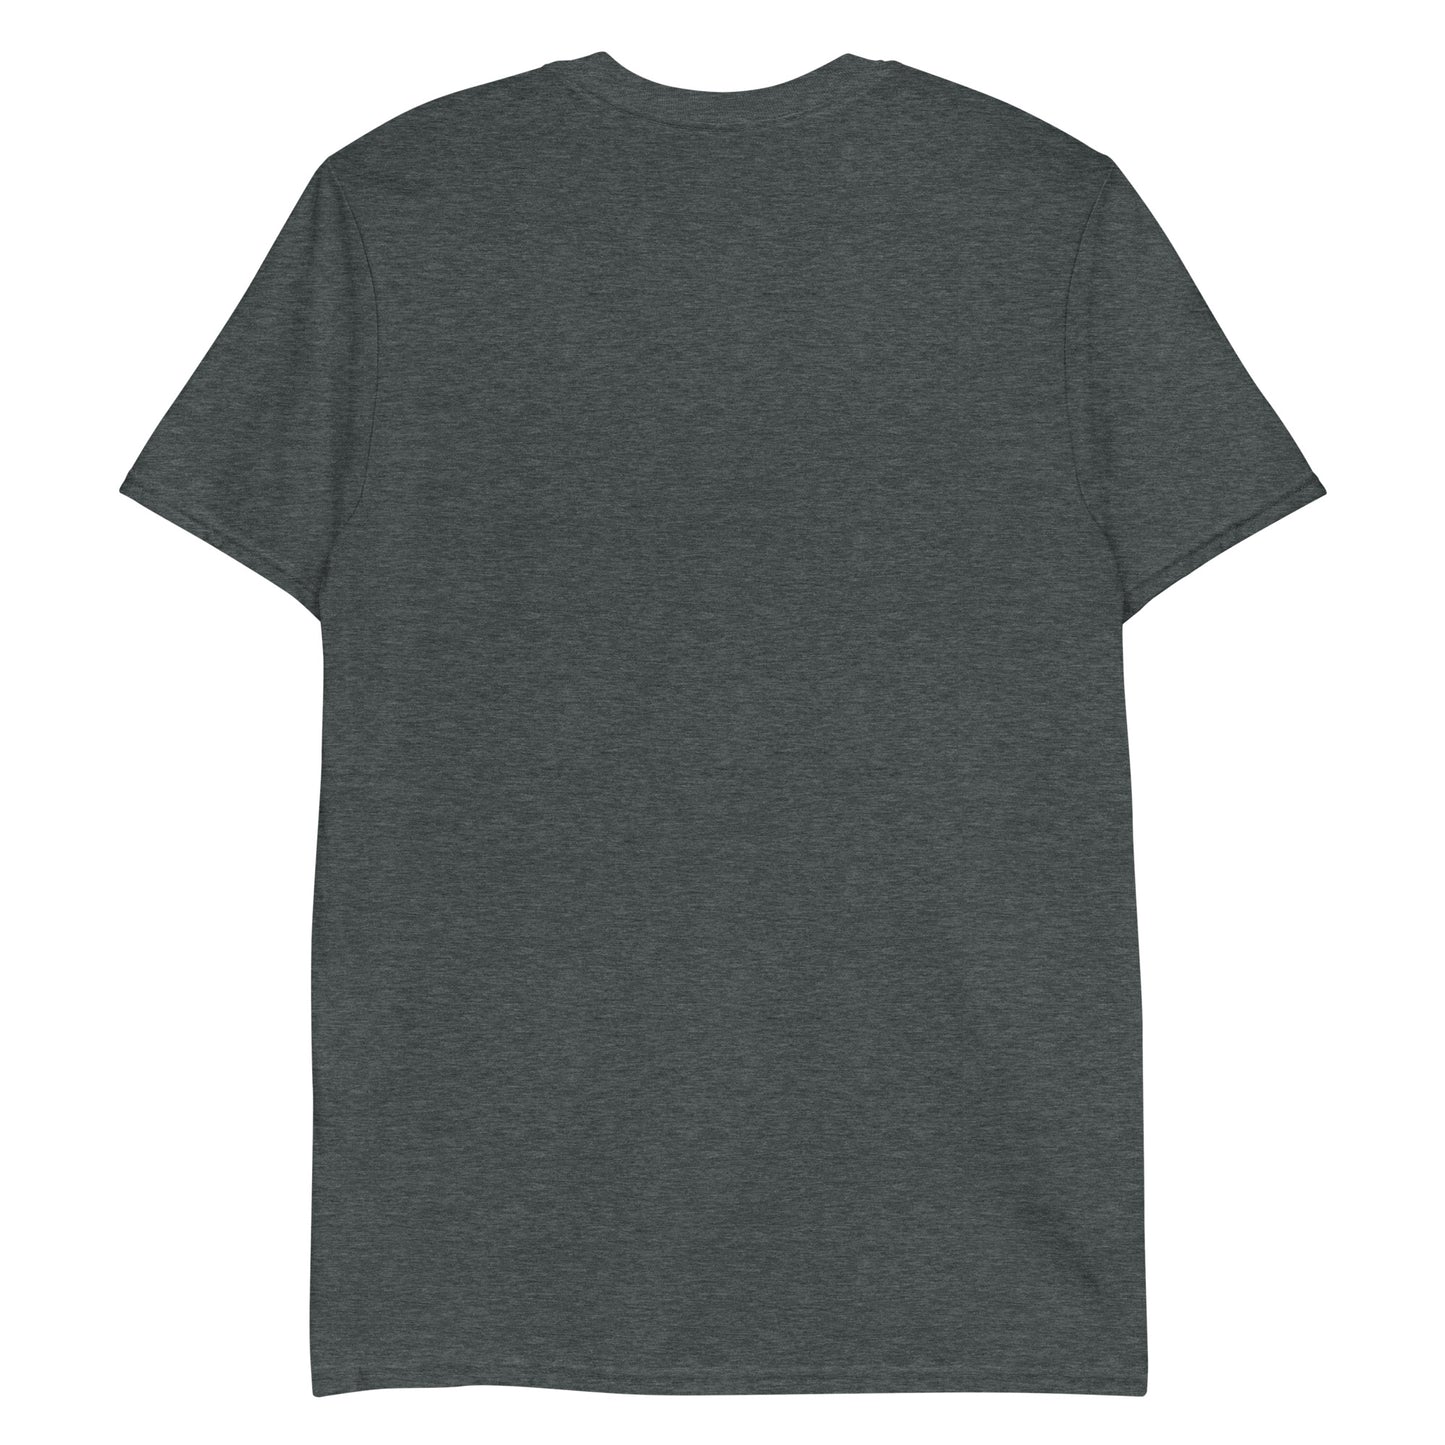 WWTD Short-Sleeve Unisex T-Shirt